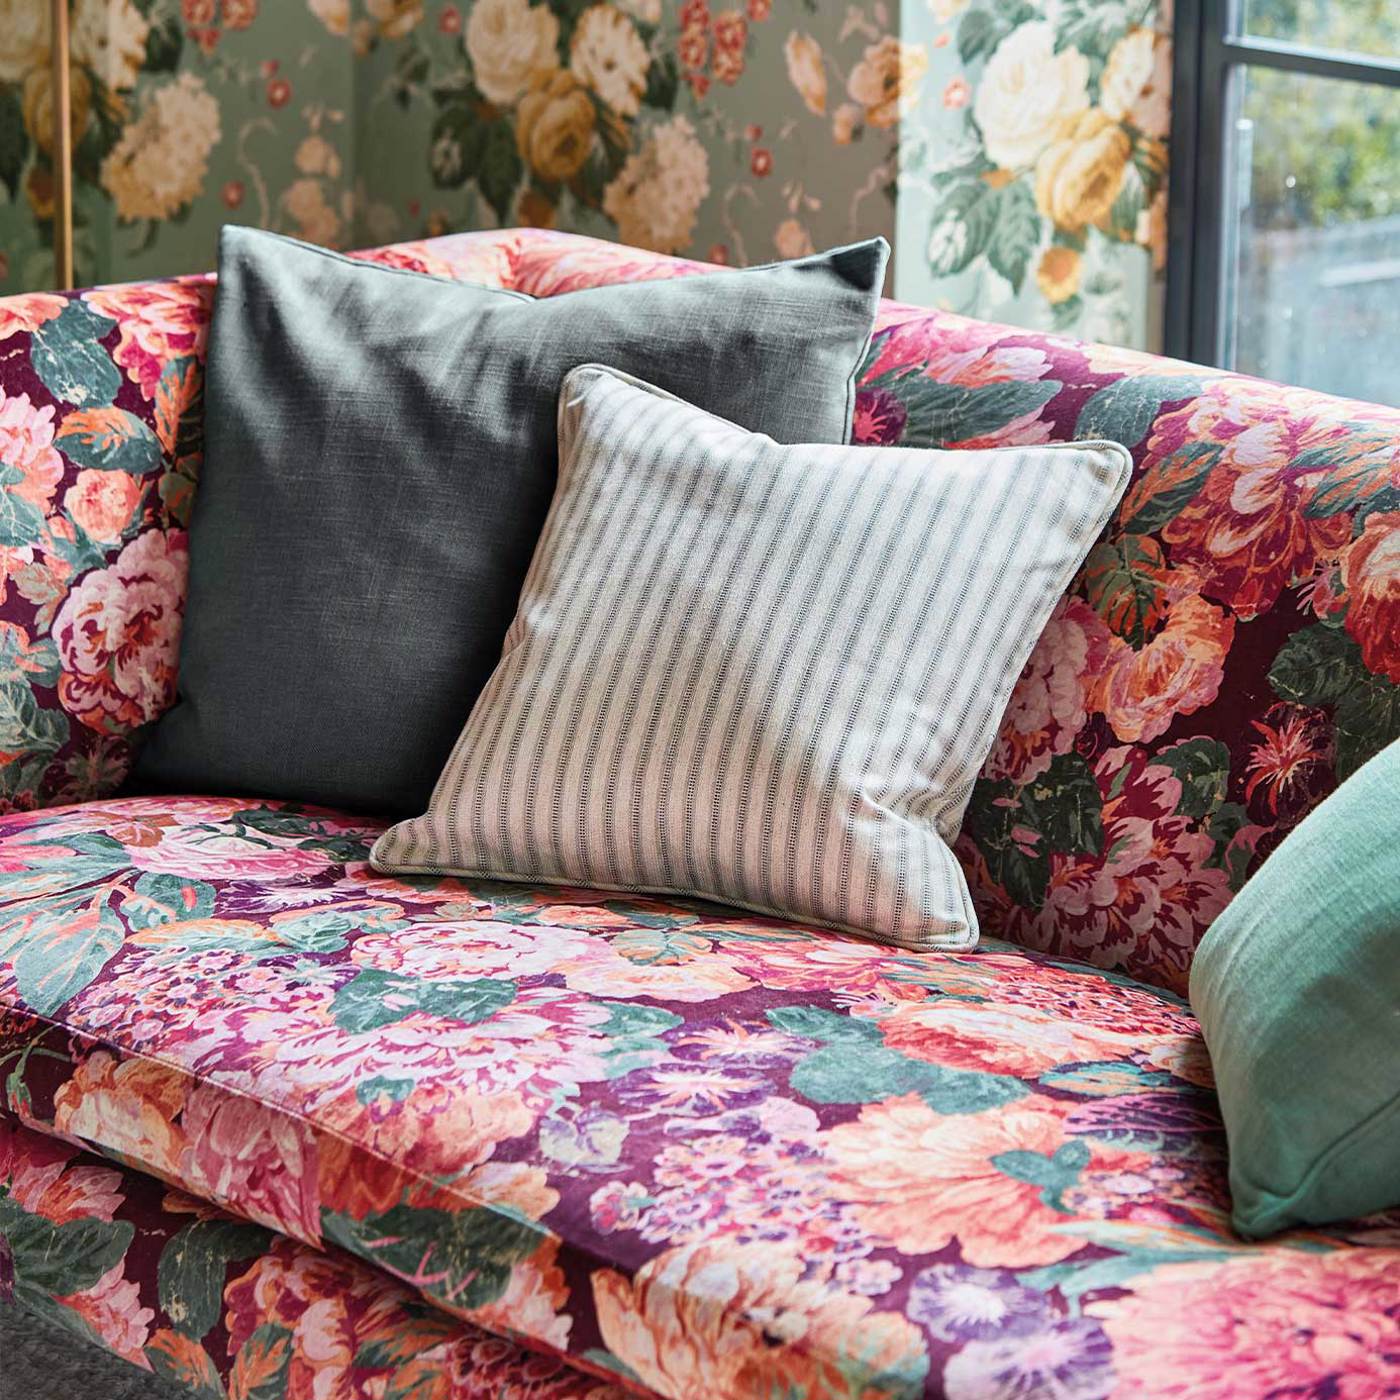 Very Rose and Peony Kingfisher/Rowan Berry Fabric by SAN